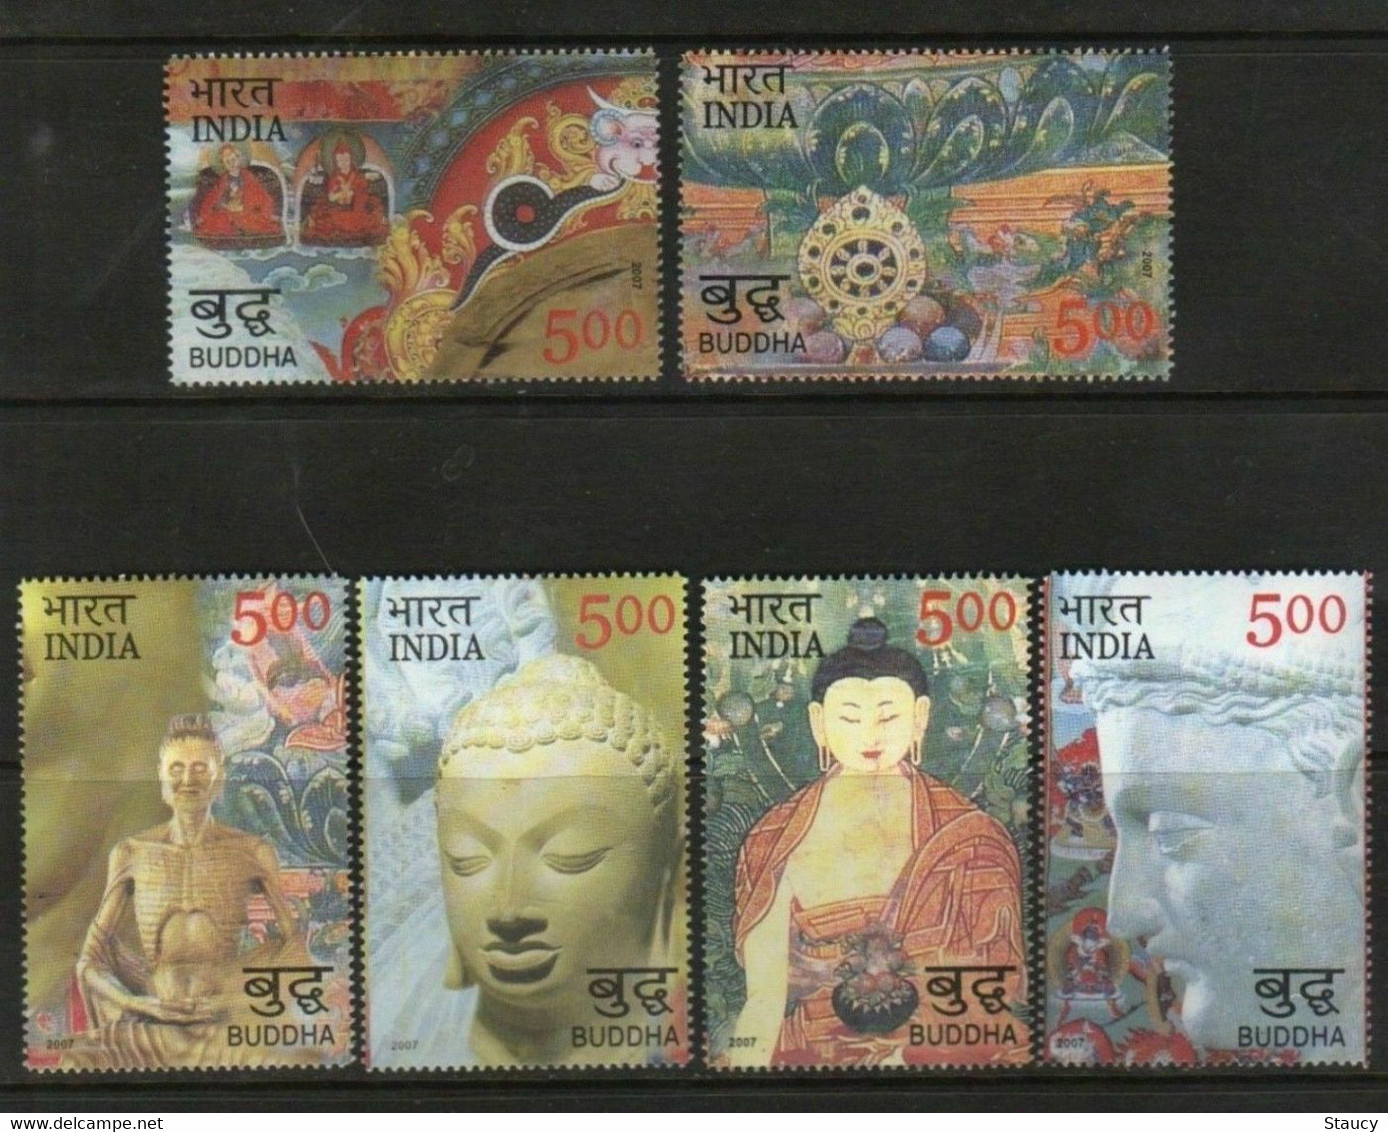 INDIA 2007 2550 YEARS OF MAHAPARINIRVANA OF THE BUDDHA 6v SET MNH, P.O Fresh & Fine - Gravuren